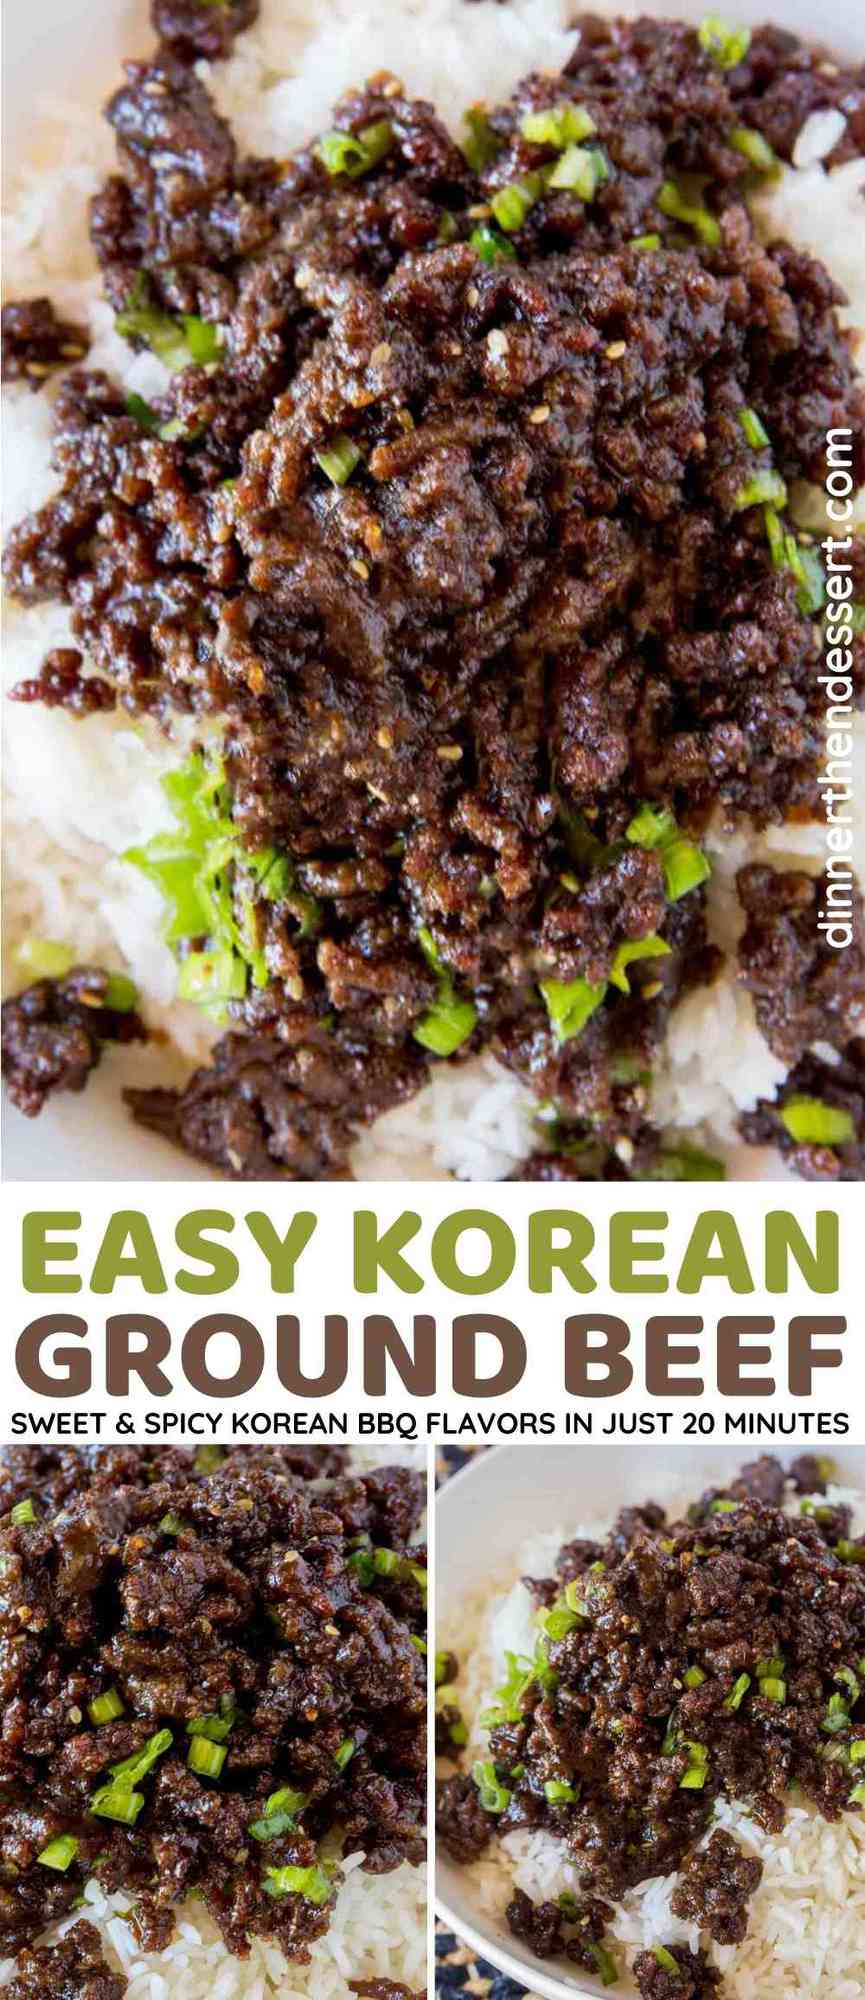 https://dinnerthendessert.com/wp-content/uploads/2018/01/Korean-Ground-Beef-L.jpg